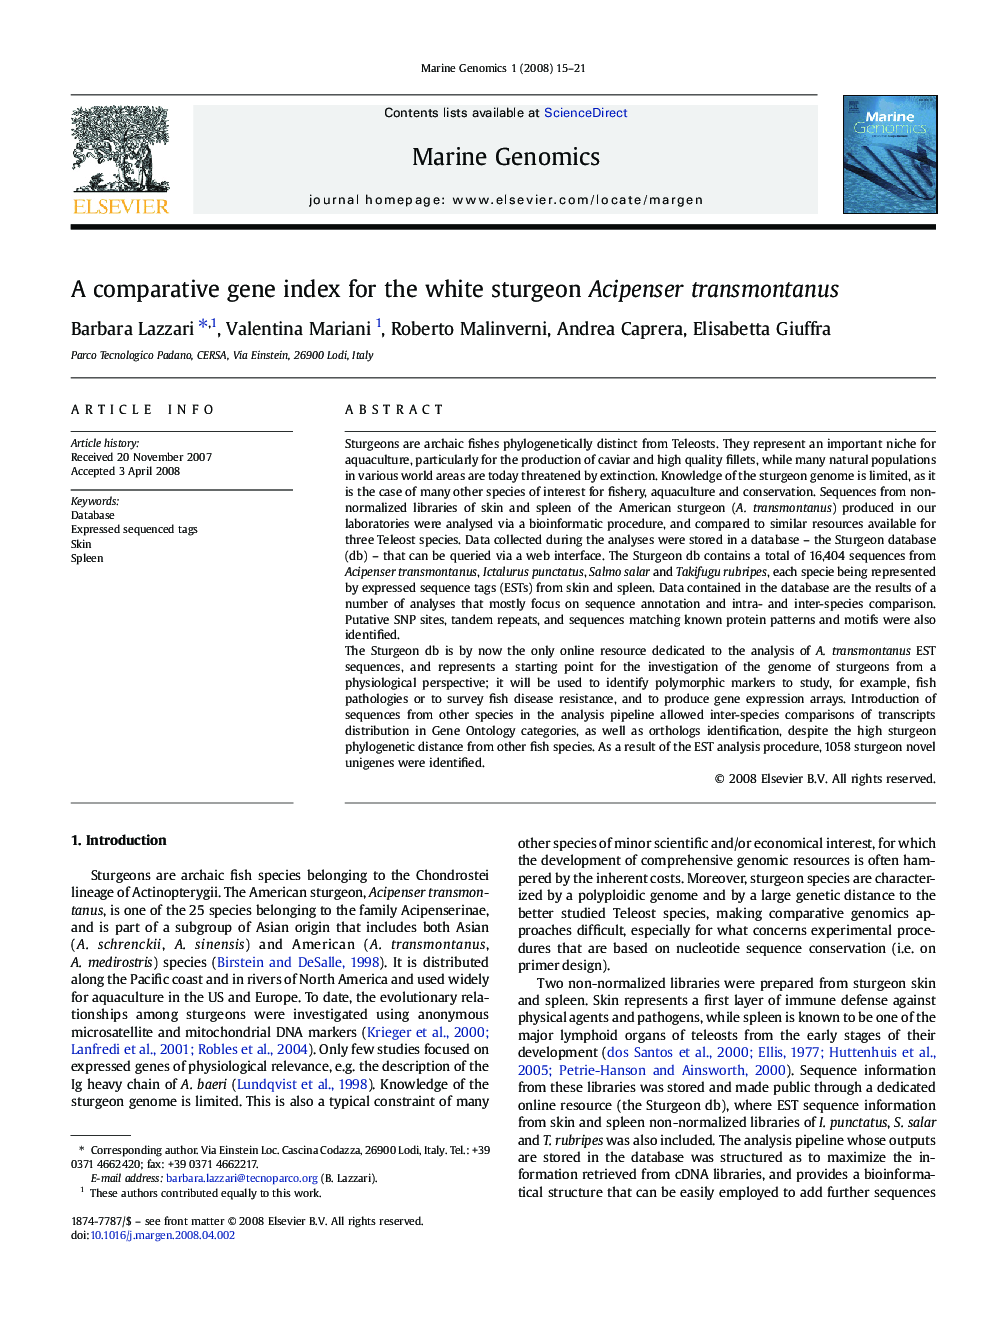 A comparative gene index for the white sturgeon Acipenser transmontanus